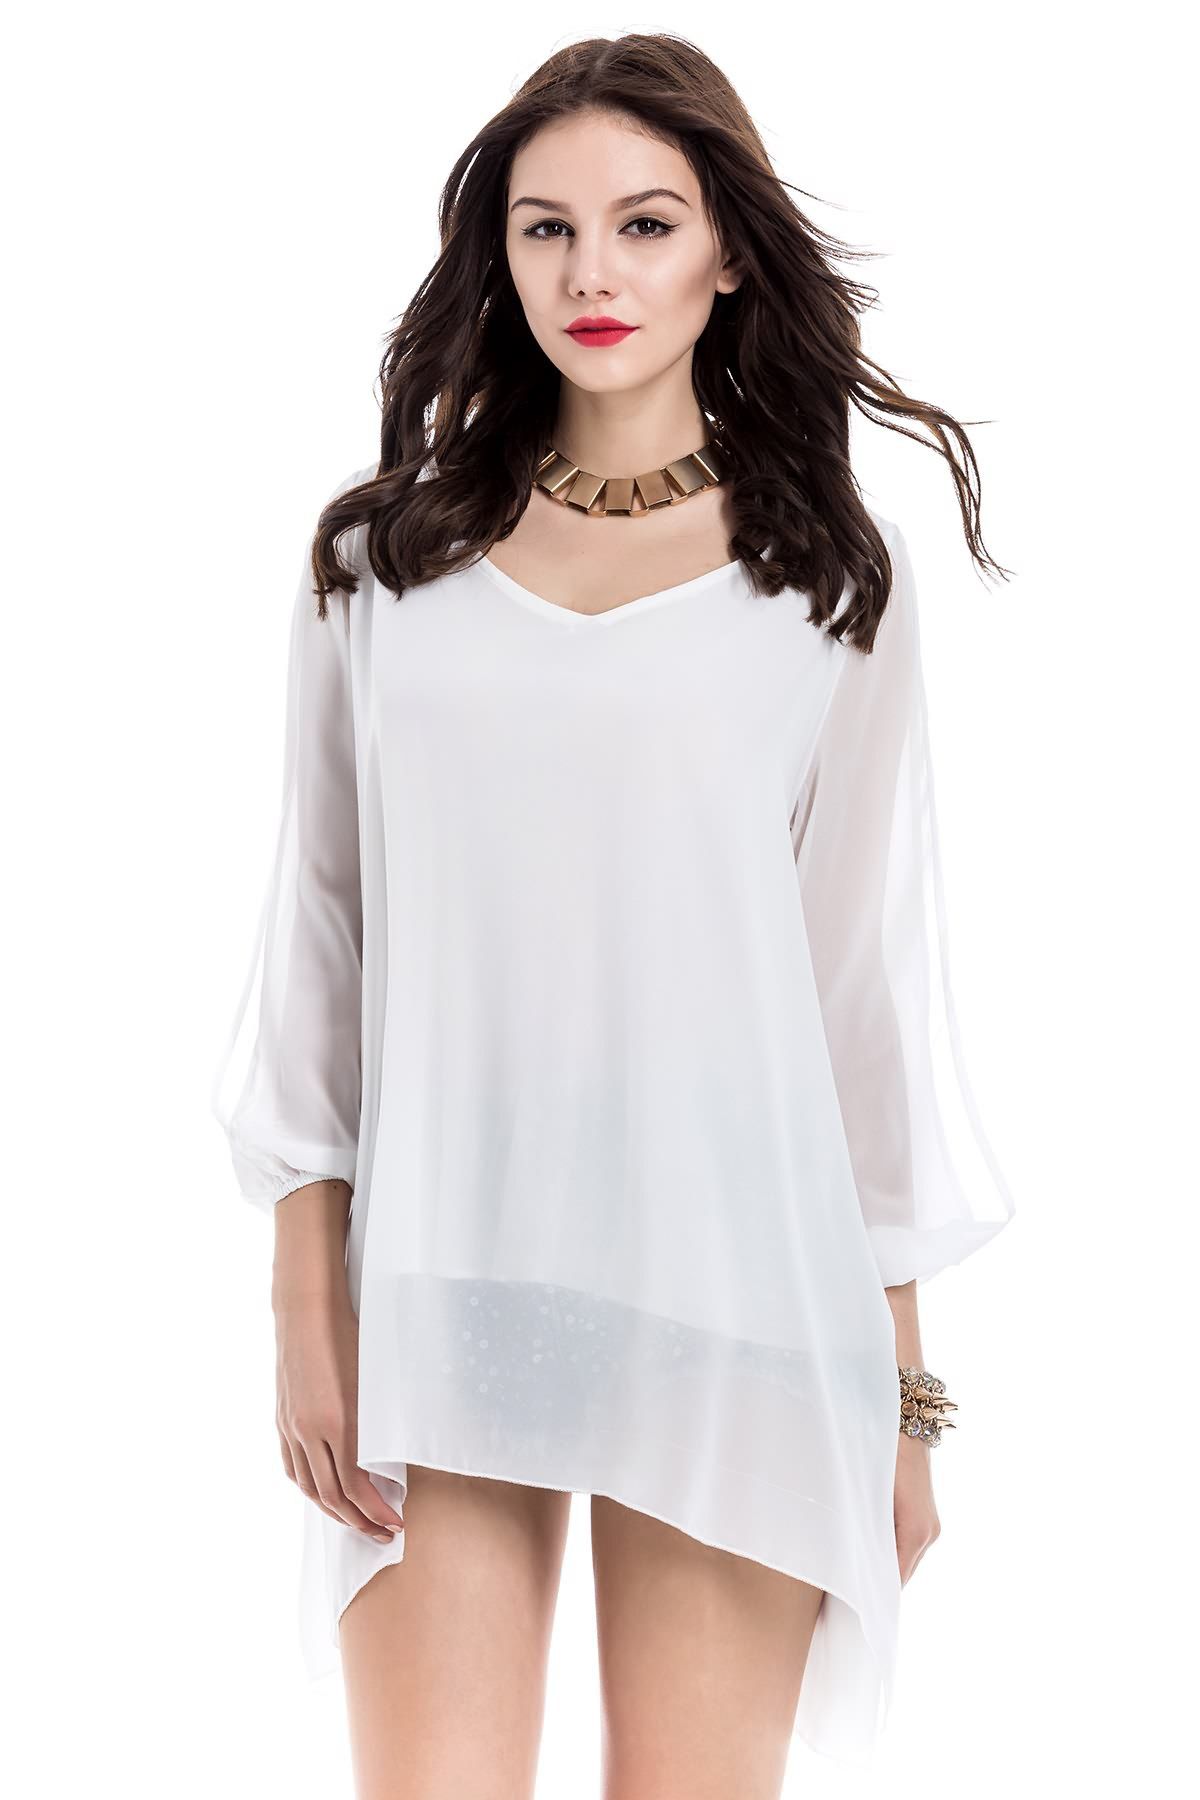 White Xl Loose-fitting Chiffon Beach Dress | RoseGal.com
